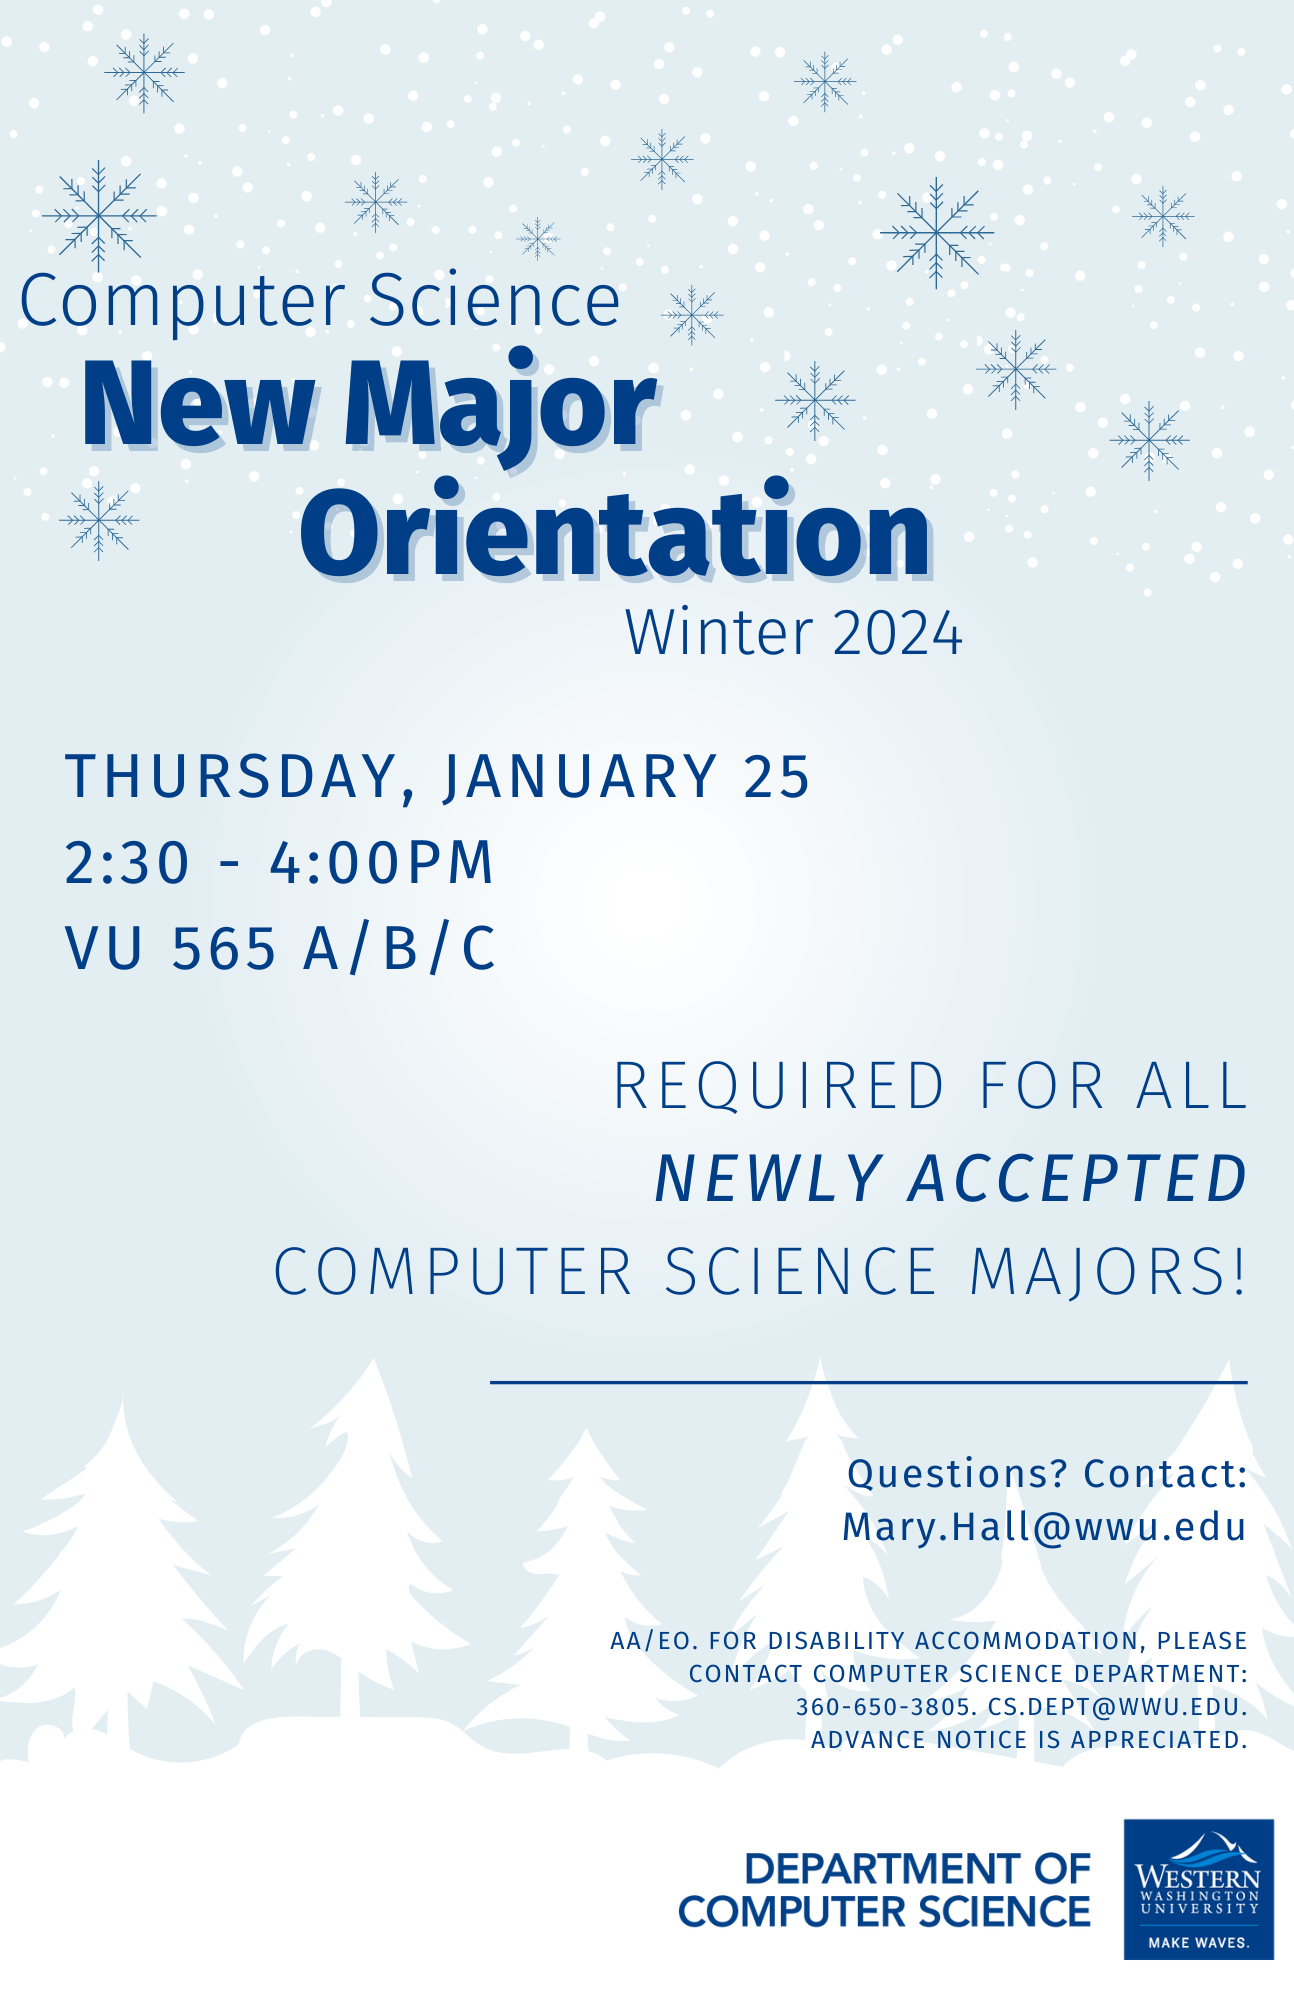 Winter New Major Orientation Thursday January 25th 2:30pm - 4:00pm